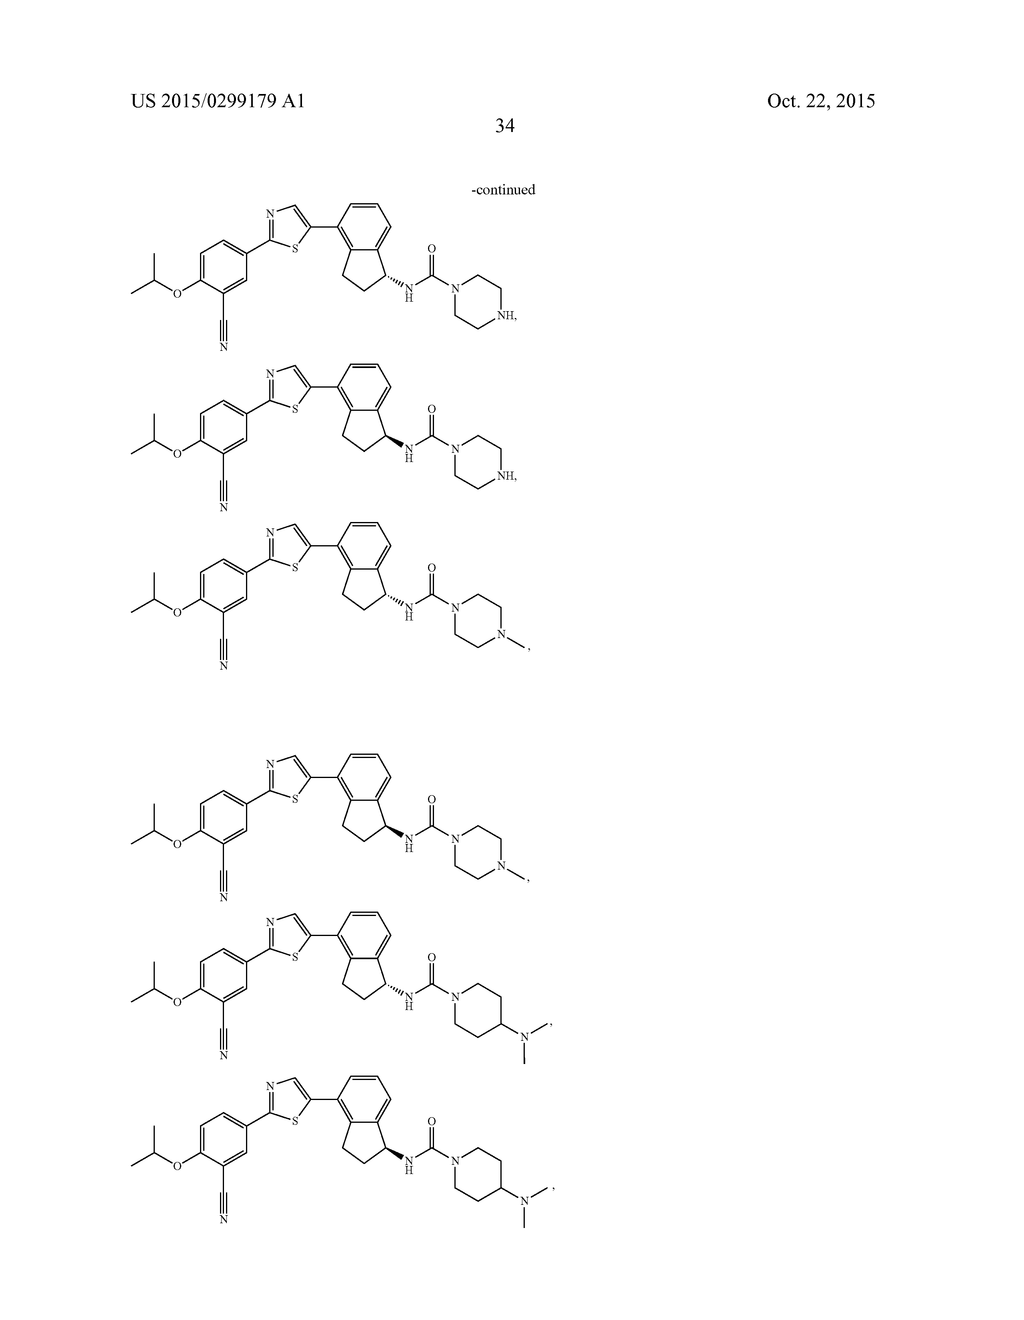 SELECTIVE HETEROCYCLIC SPHINGOSINE 1 PHOSPHATE RECEPTOR MODULATORS - diagram, schematic, and image 35